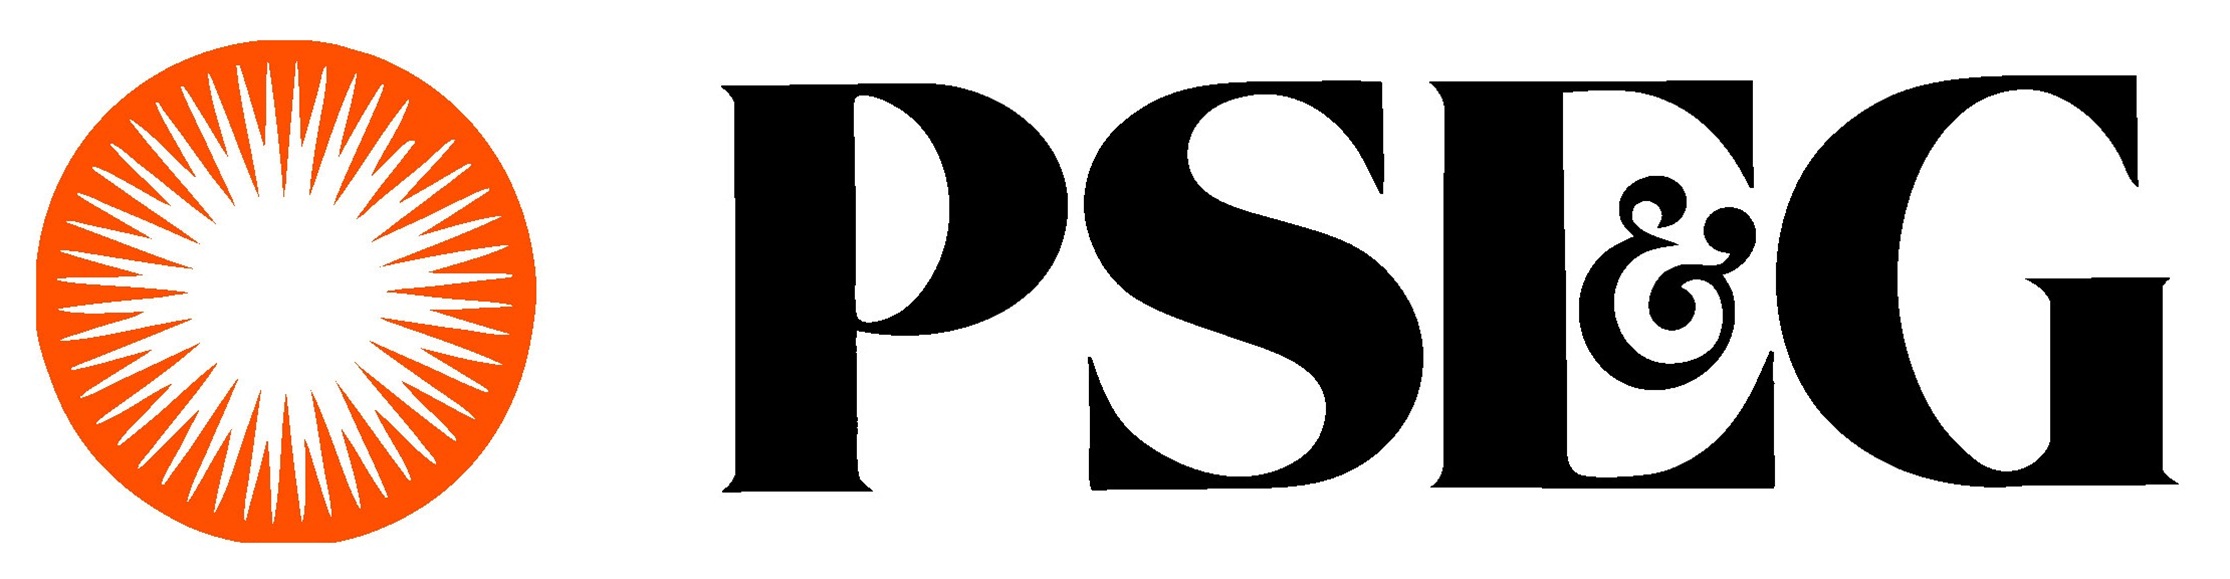 public-service-enterprise-group-logo.jpg